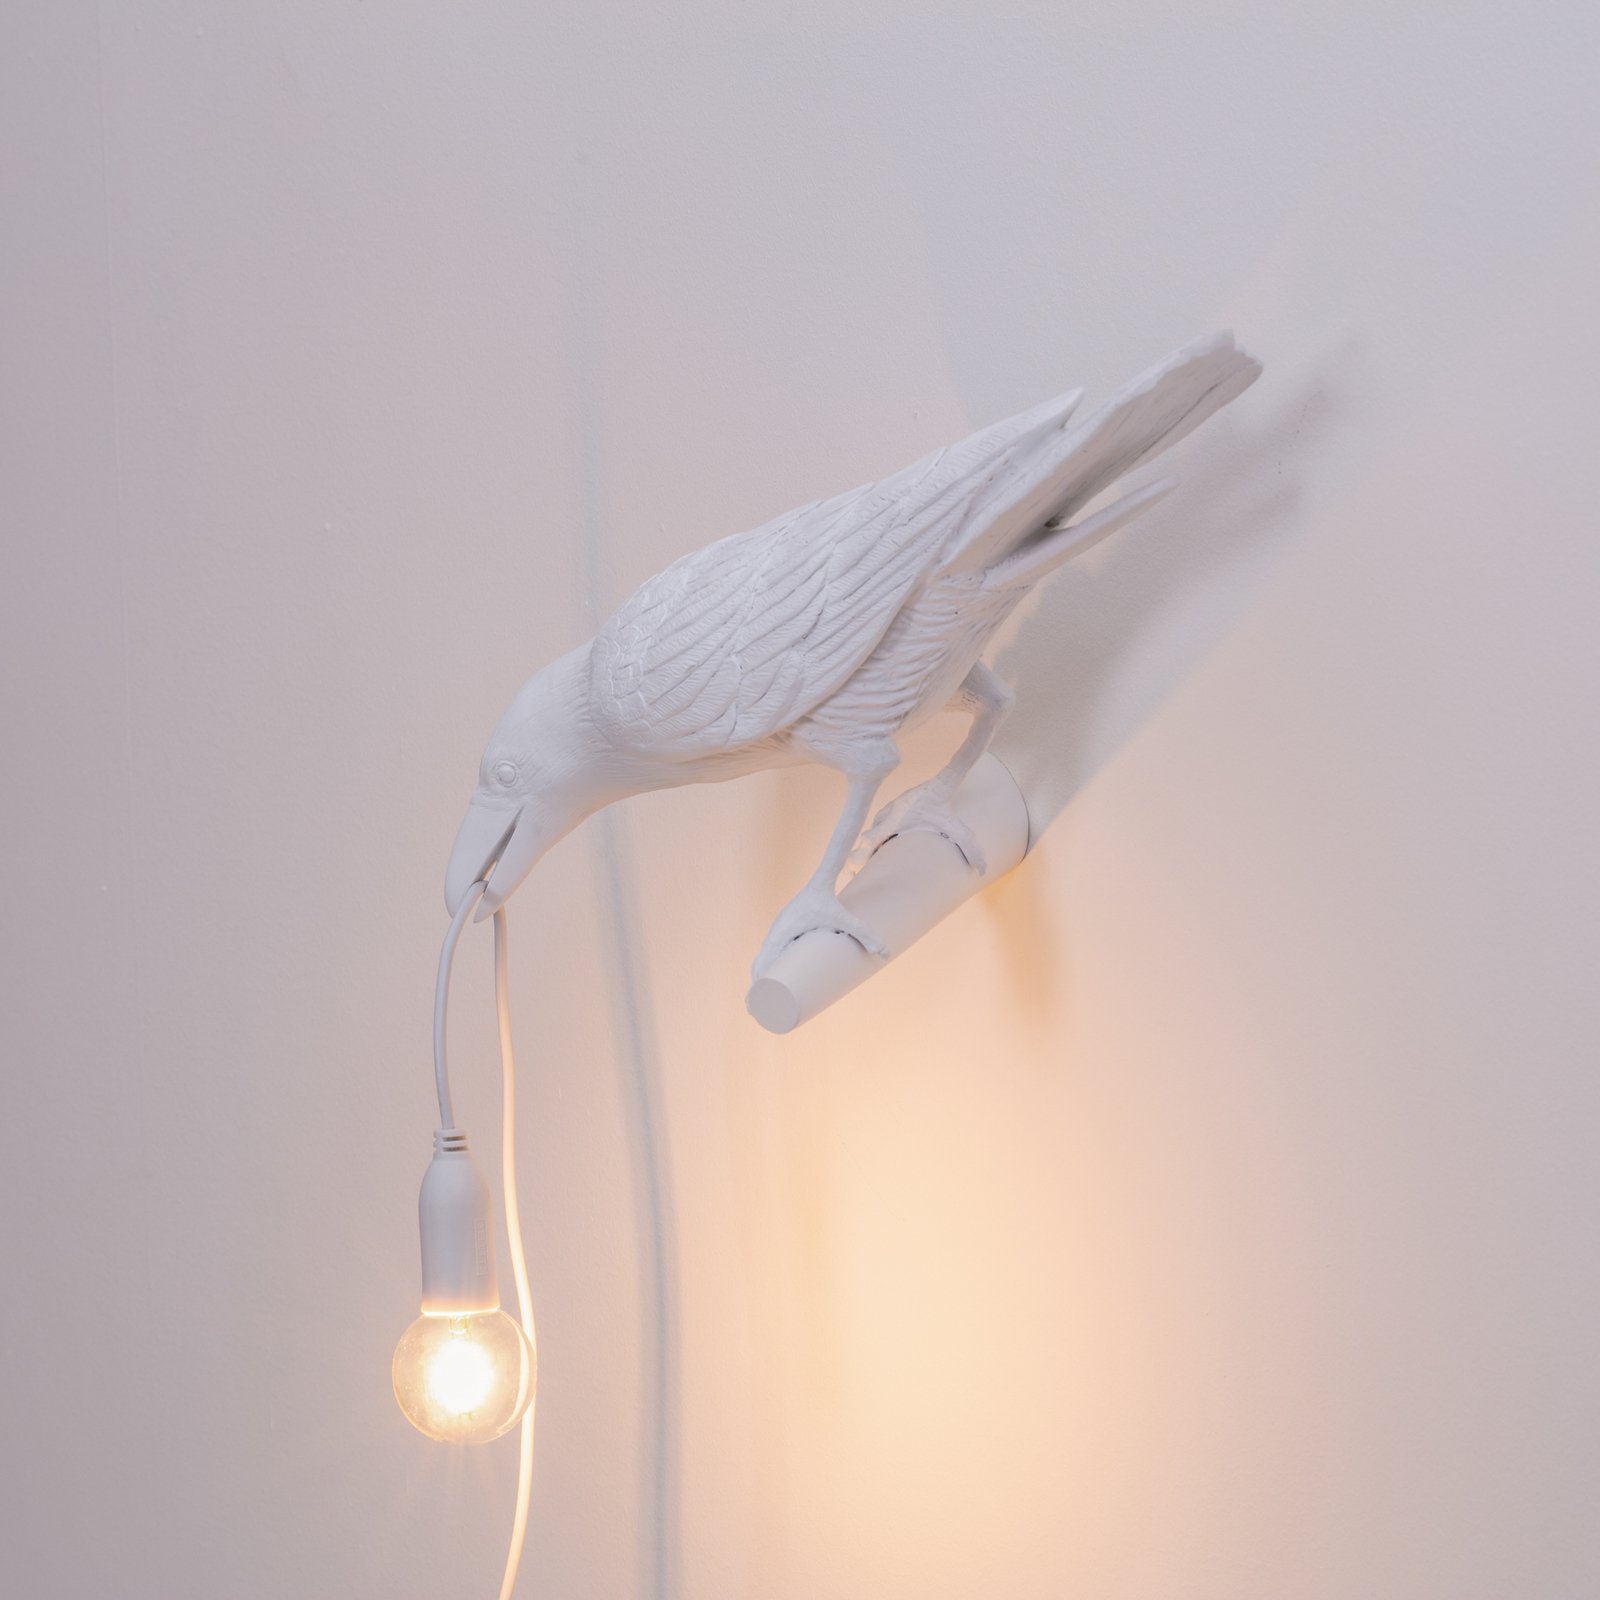 SELETTI Bird Lamp LED-Wandlampe, Blick links, weiß